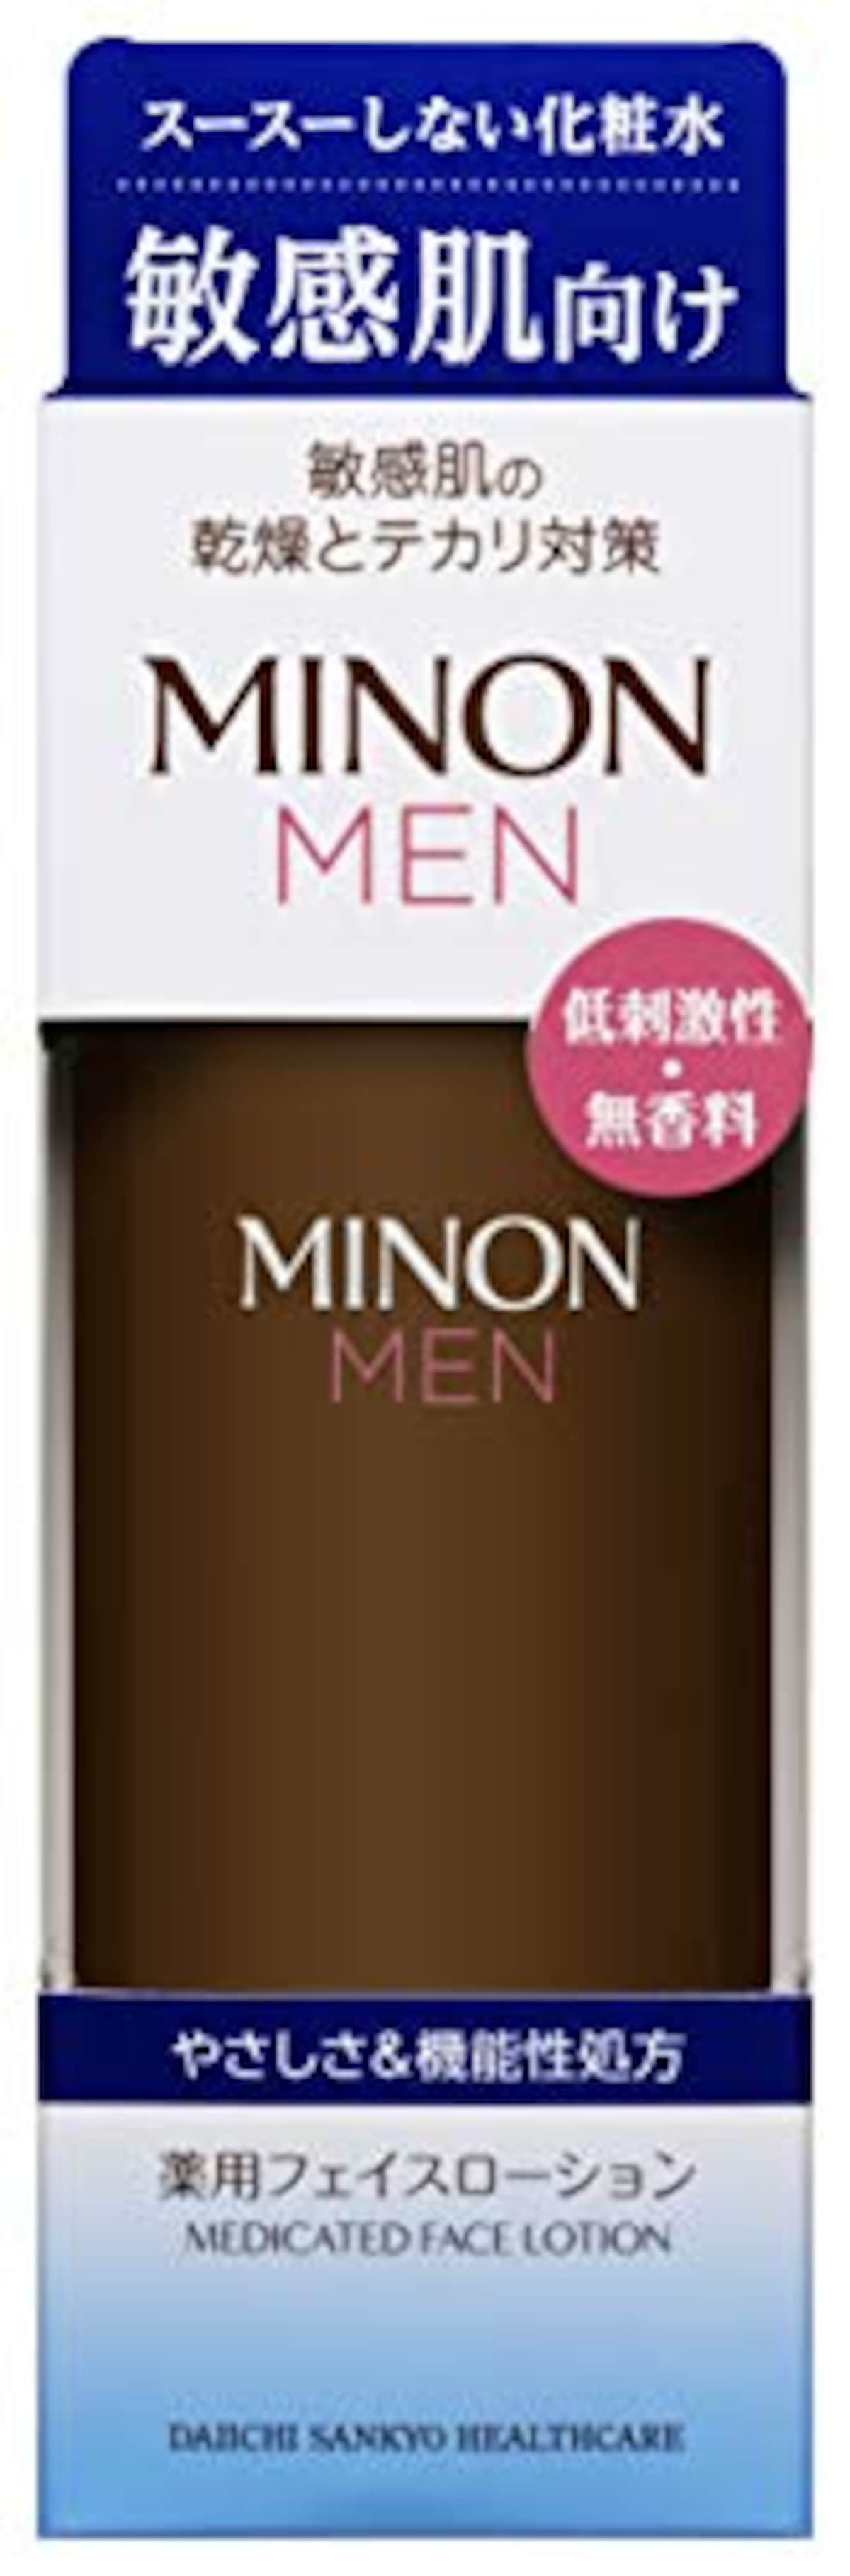  MINON MEN(ミノンメン)薬用フェイスローション